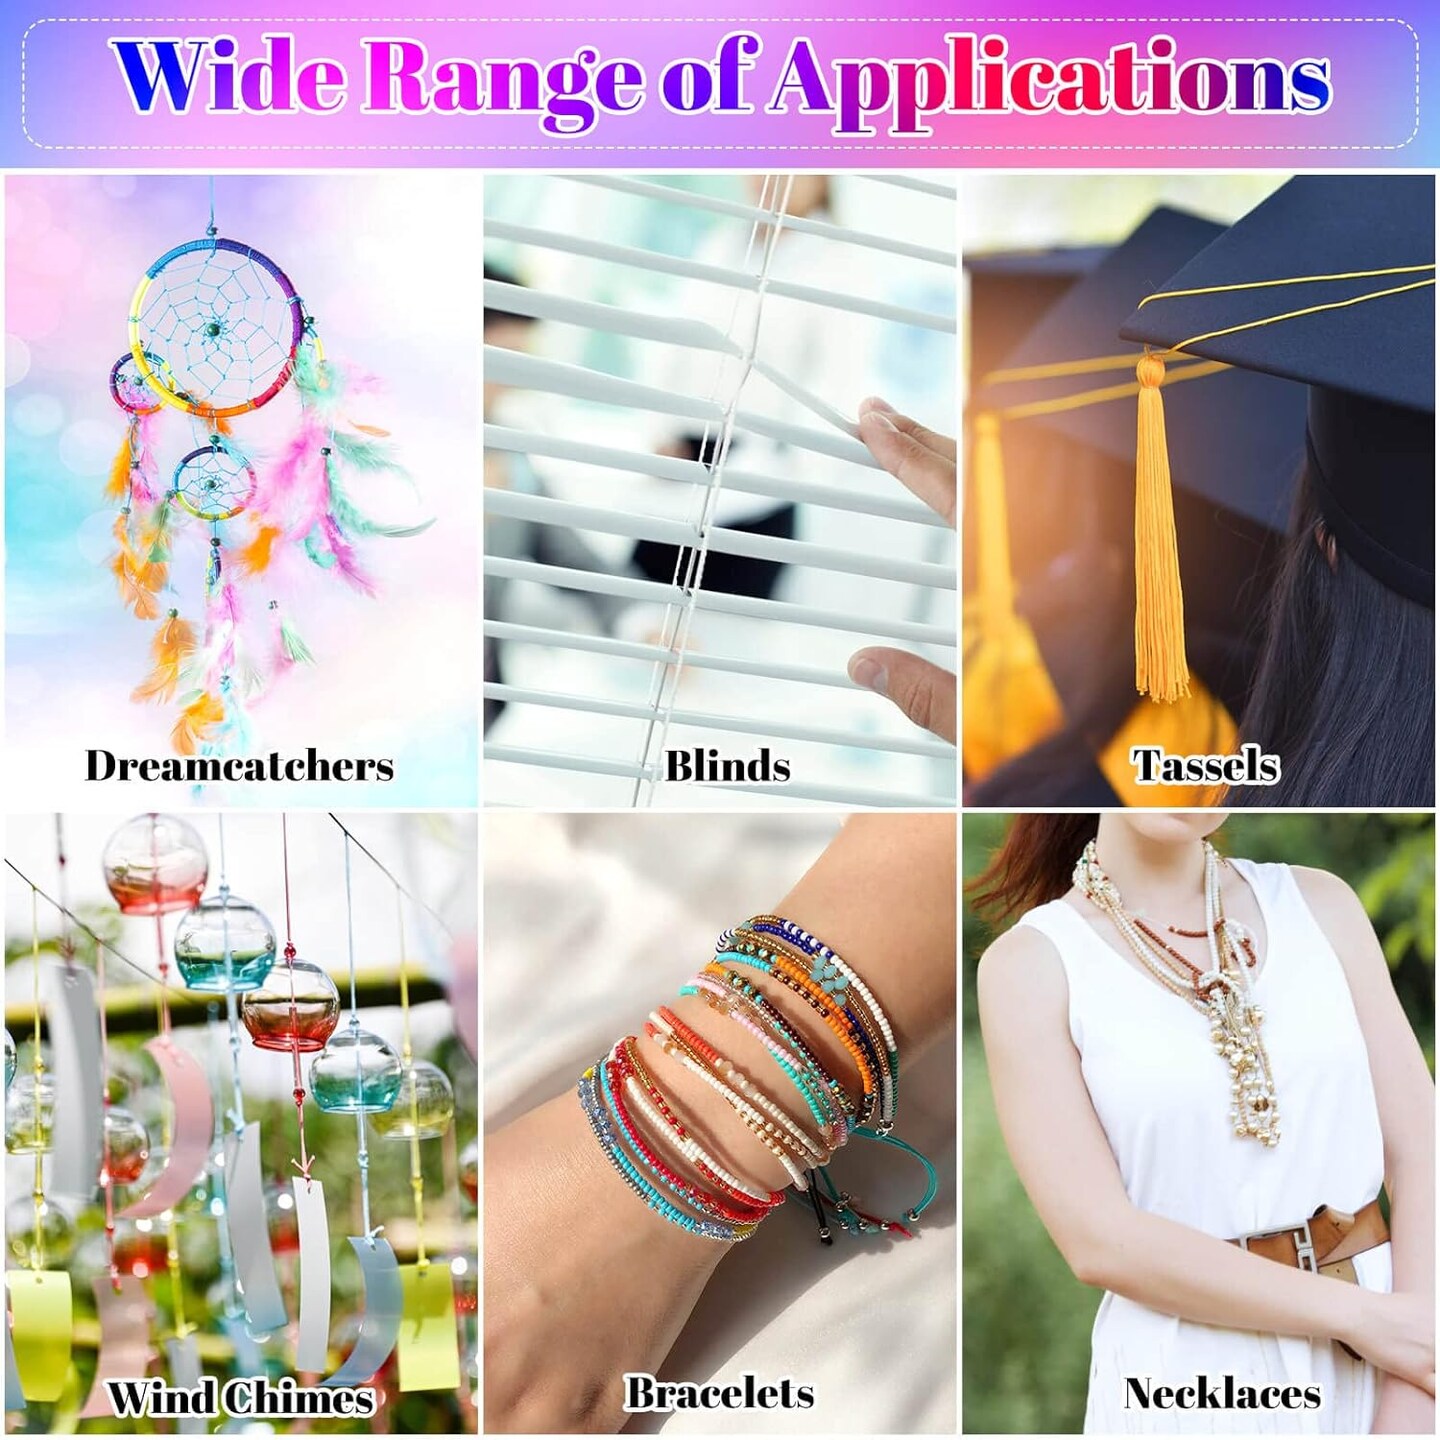 Nylon String for Bracelets, 20 Rolls Chinese Knotting Cord Nylon Beading Thread for Kumihimo, Braided Bracelets, Beading, Necklaces, Macrame Craft, Wind Chime, Jewelry Making